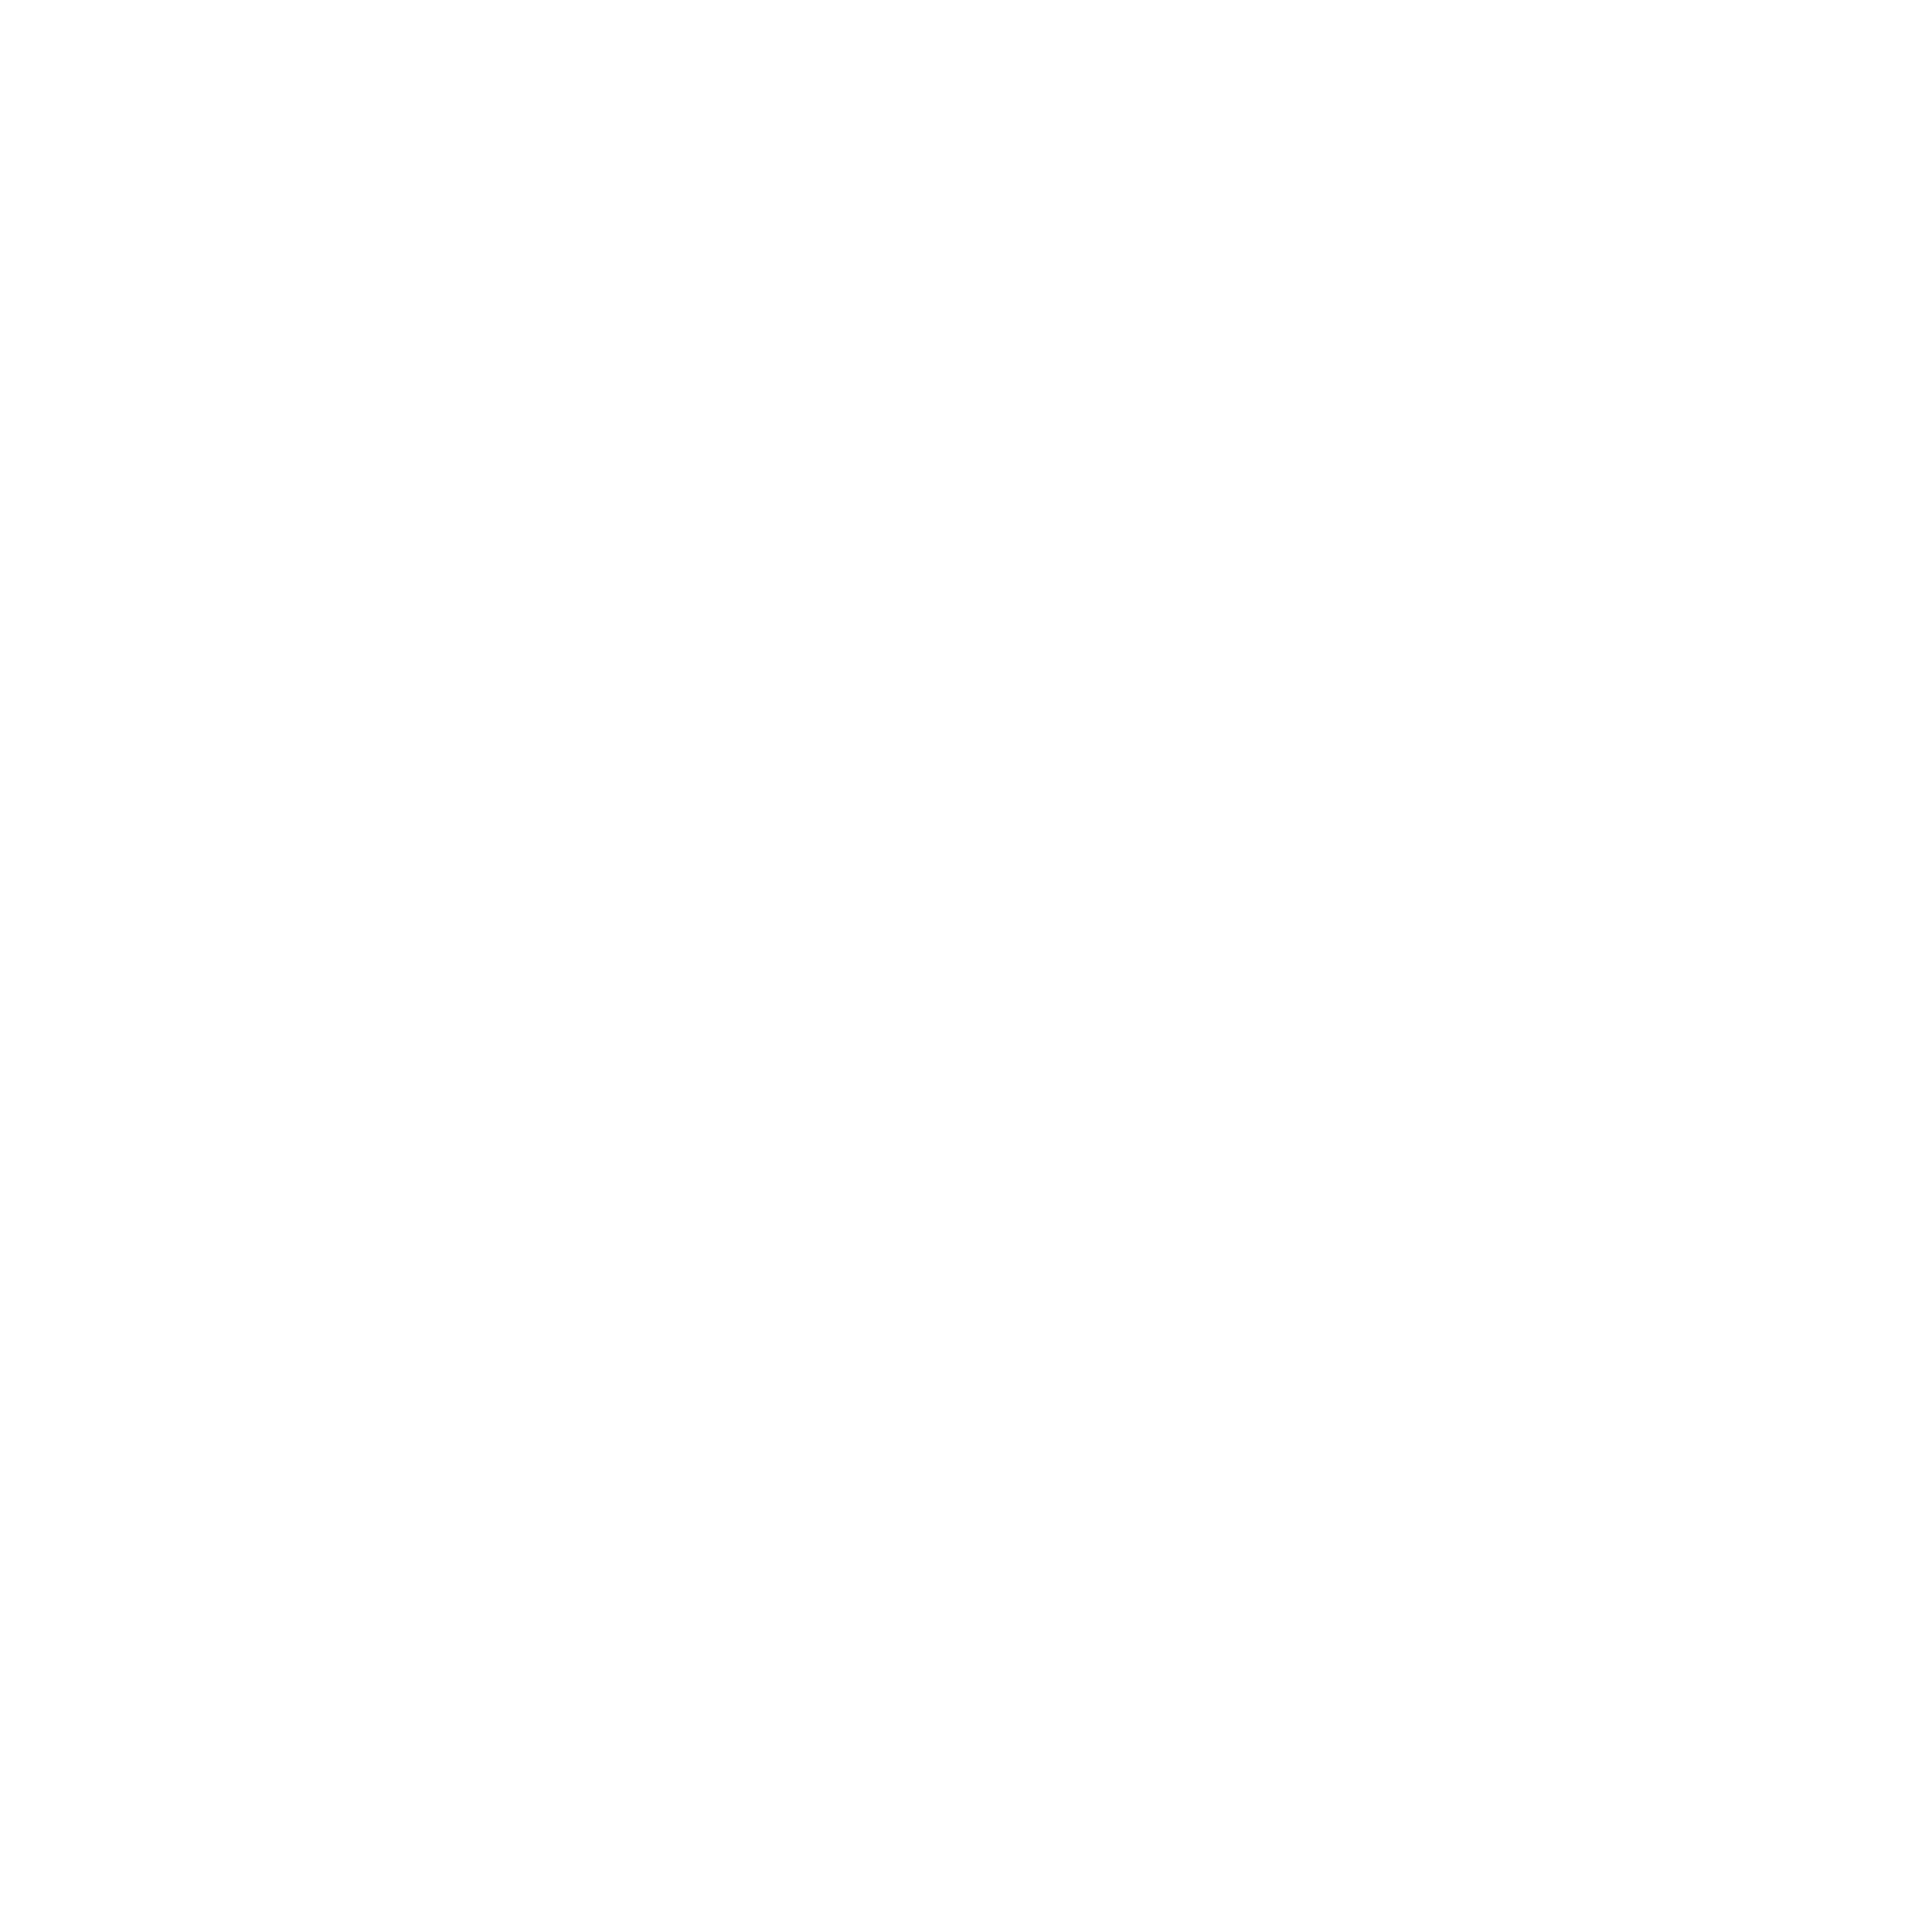 Hart-logos-black-trans6.png